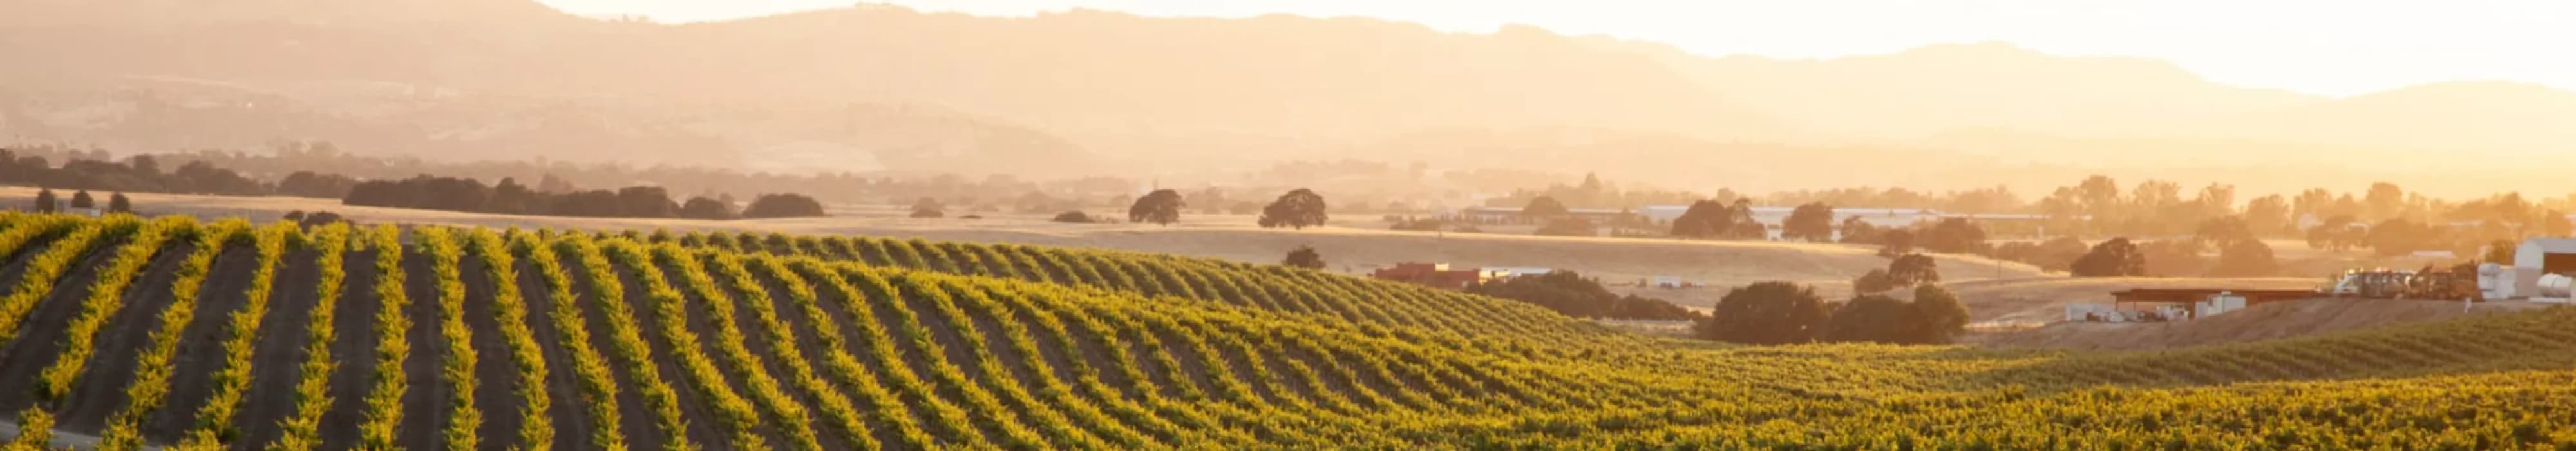 A vineyard near Butterfield Ranch Self Storage in Temecula, California